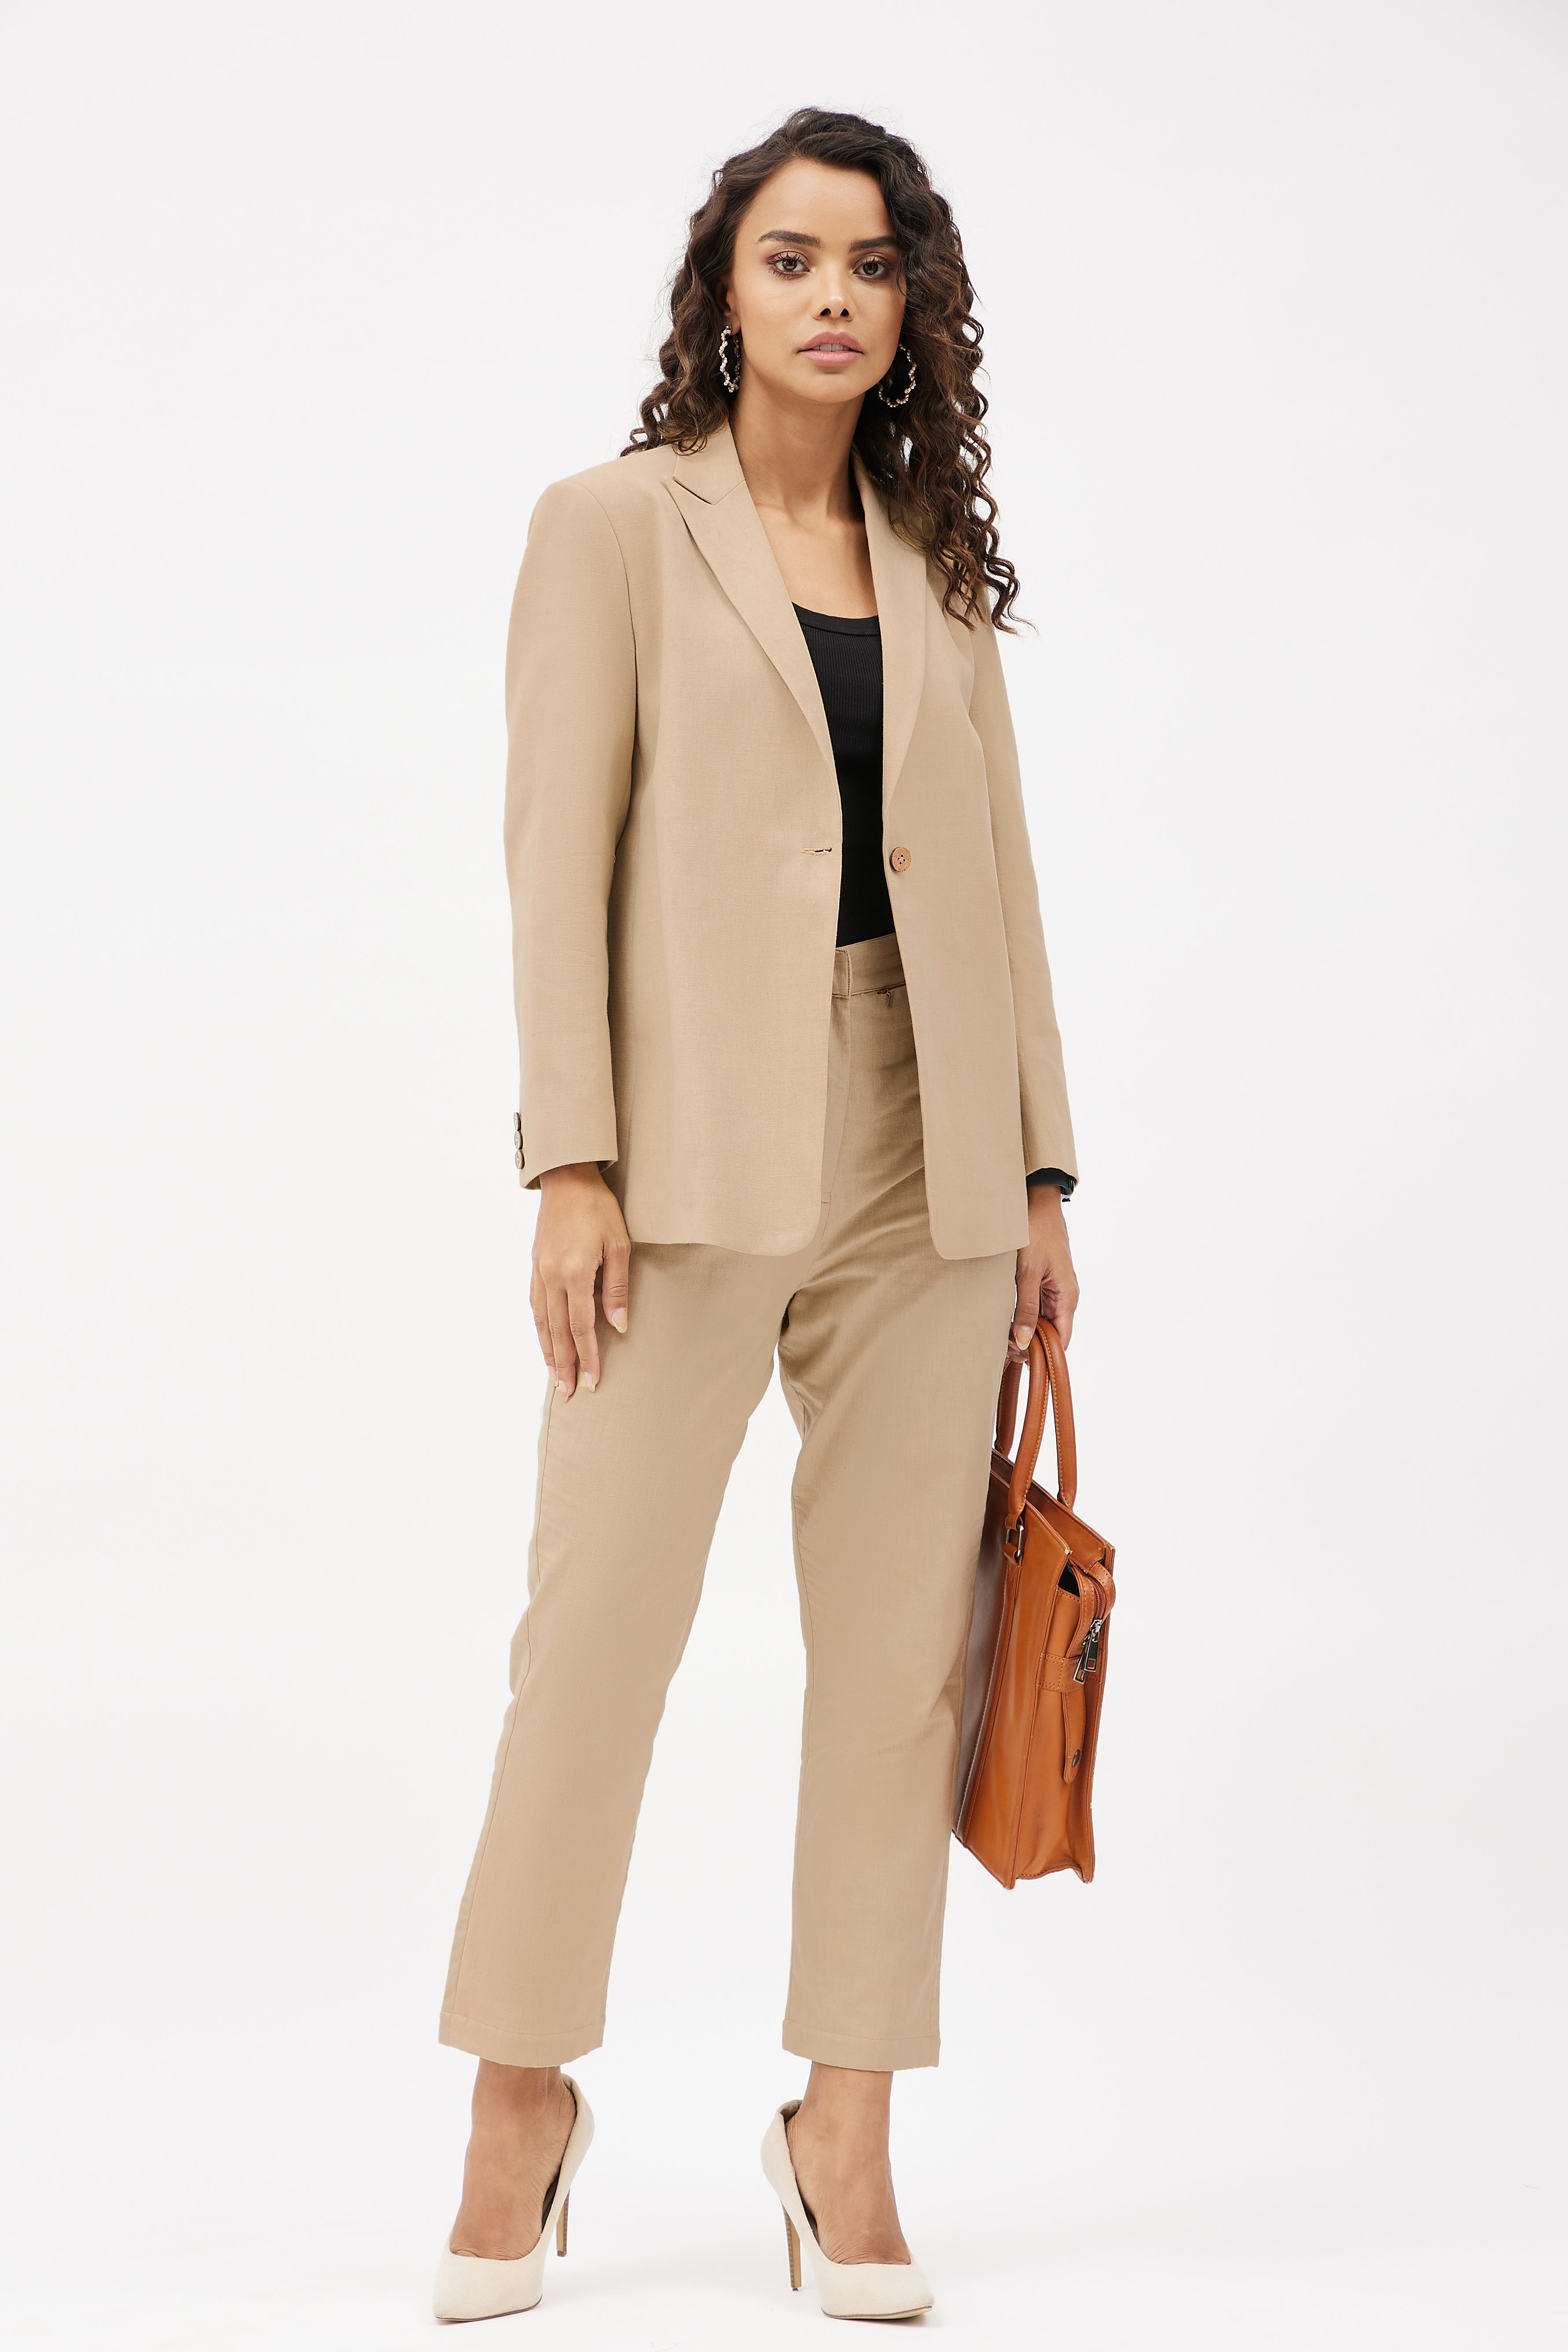 Blazers : Coats & Jackets for Women : Target